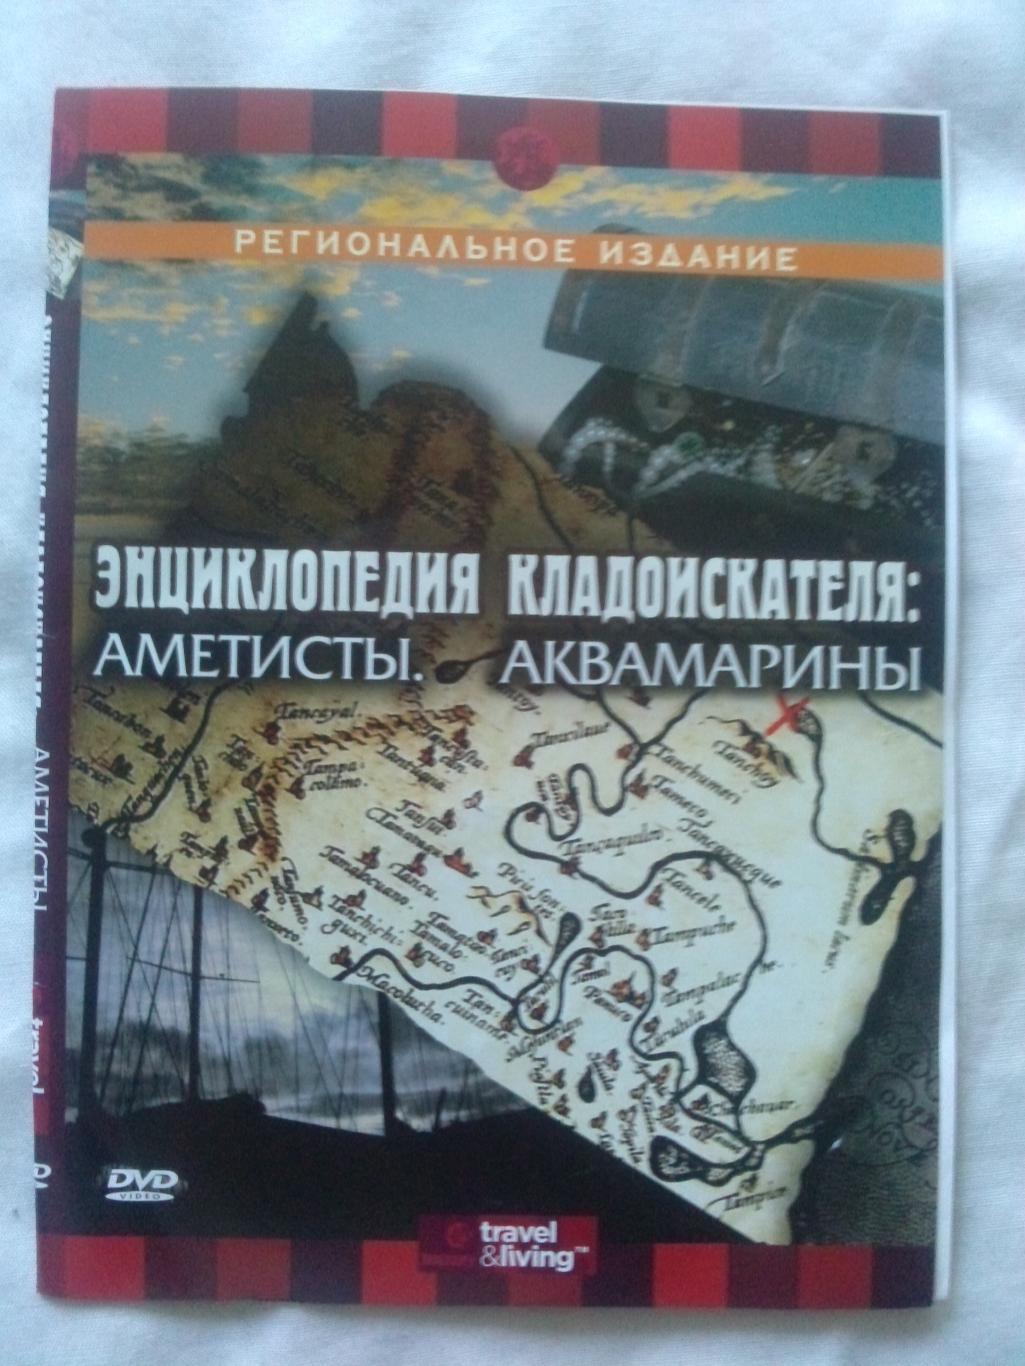 DVD Discovery Кладоискатели : Аметисты и Аквамарины (археология) лицензия